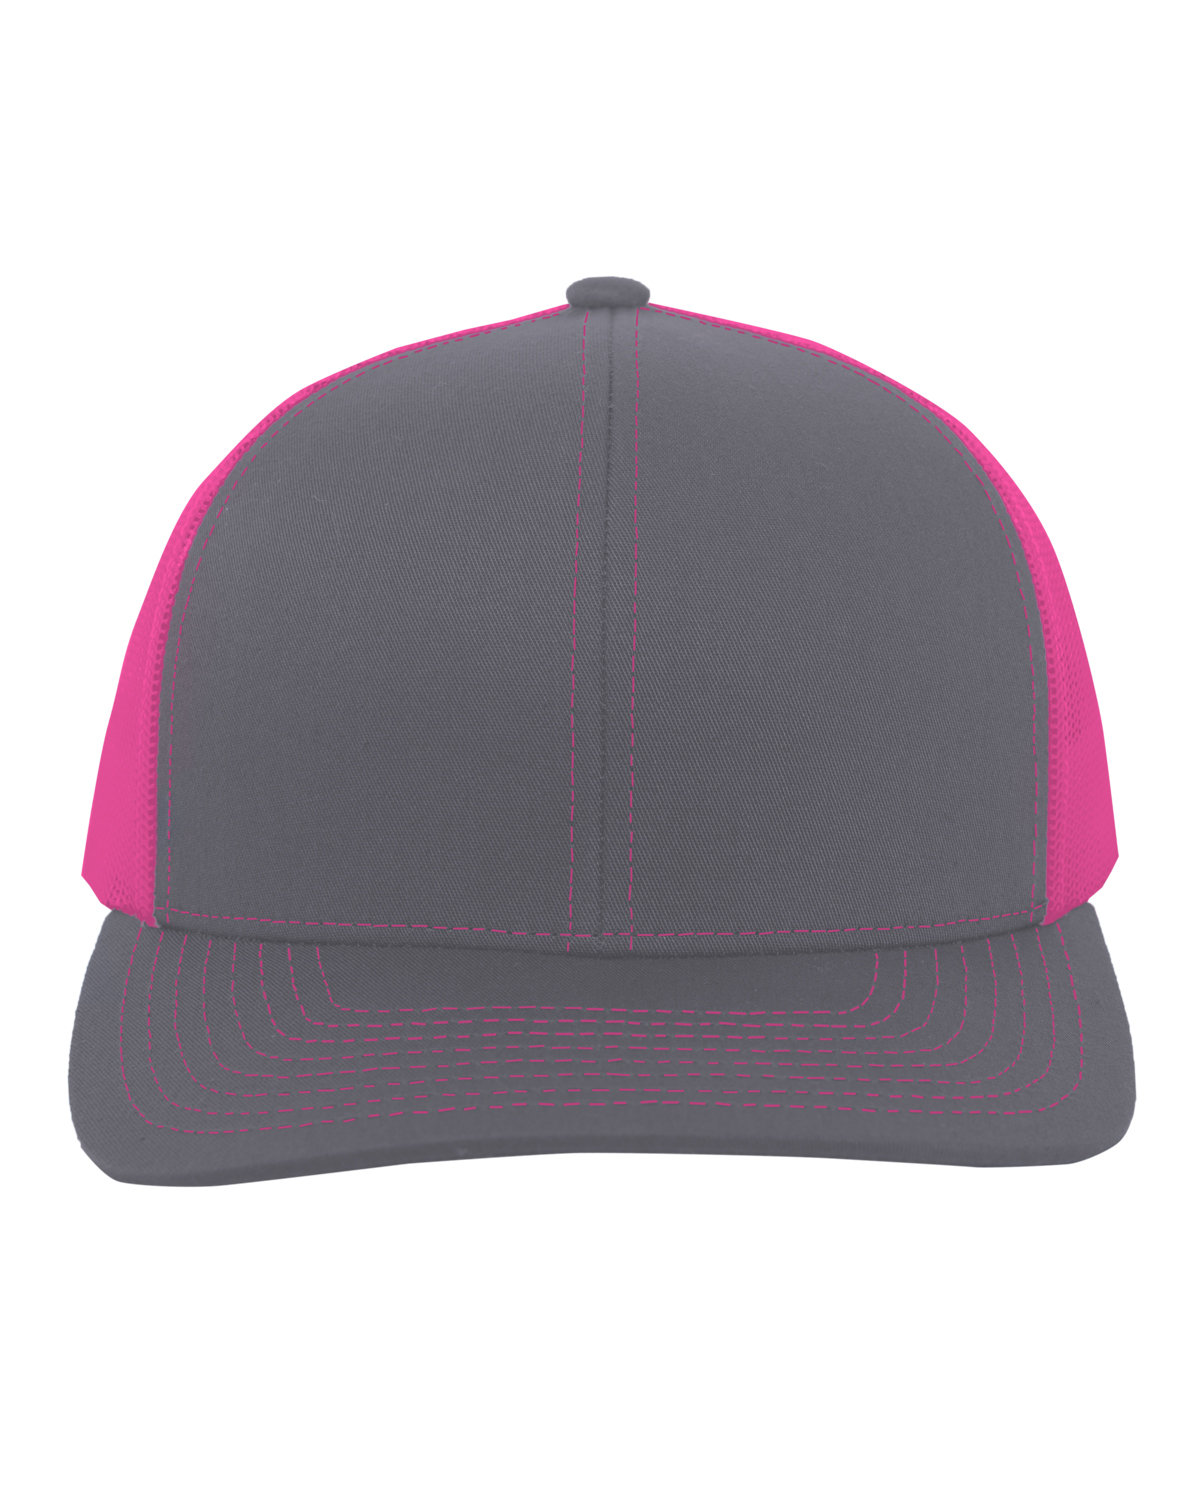 Pacific Headwear Trucker Snapback Hat GRAPHITE/ PINK 